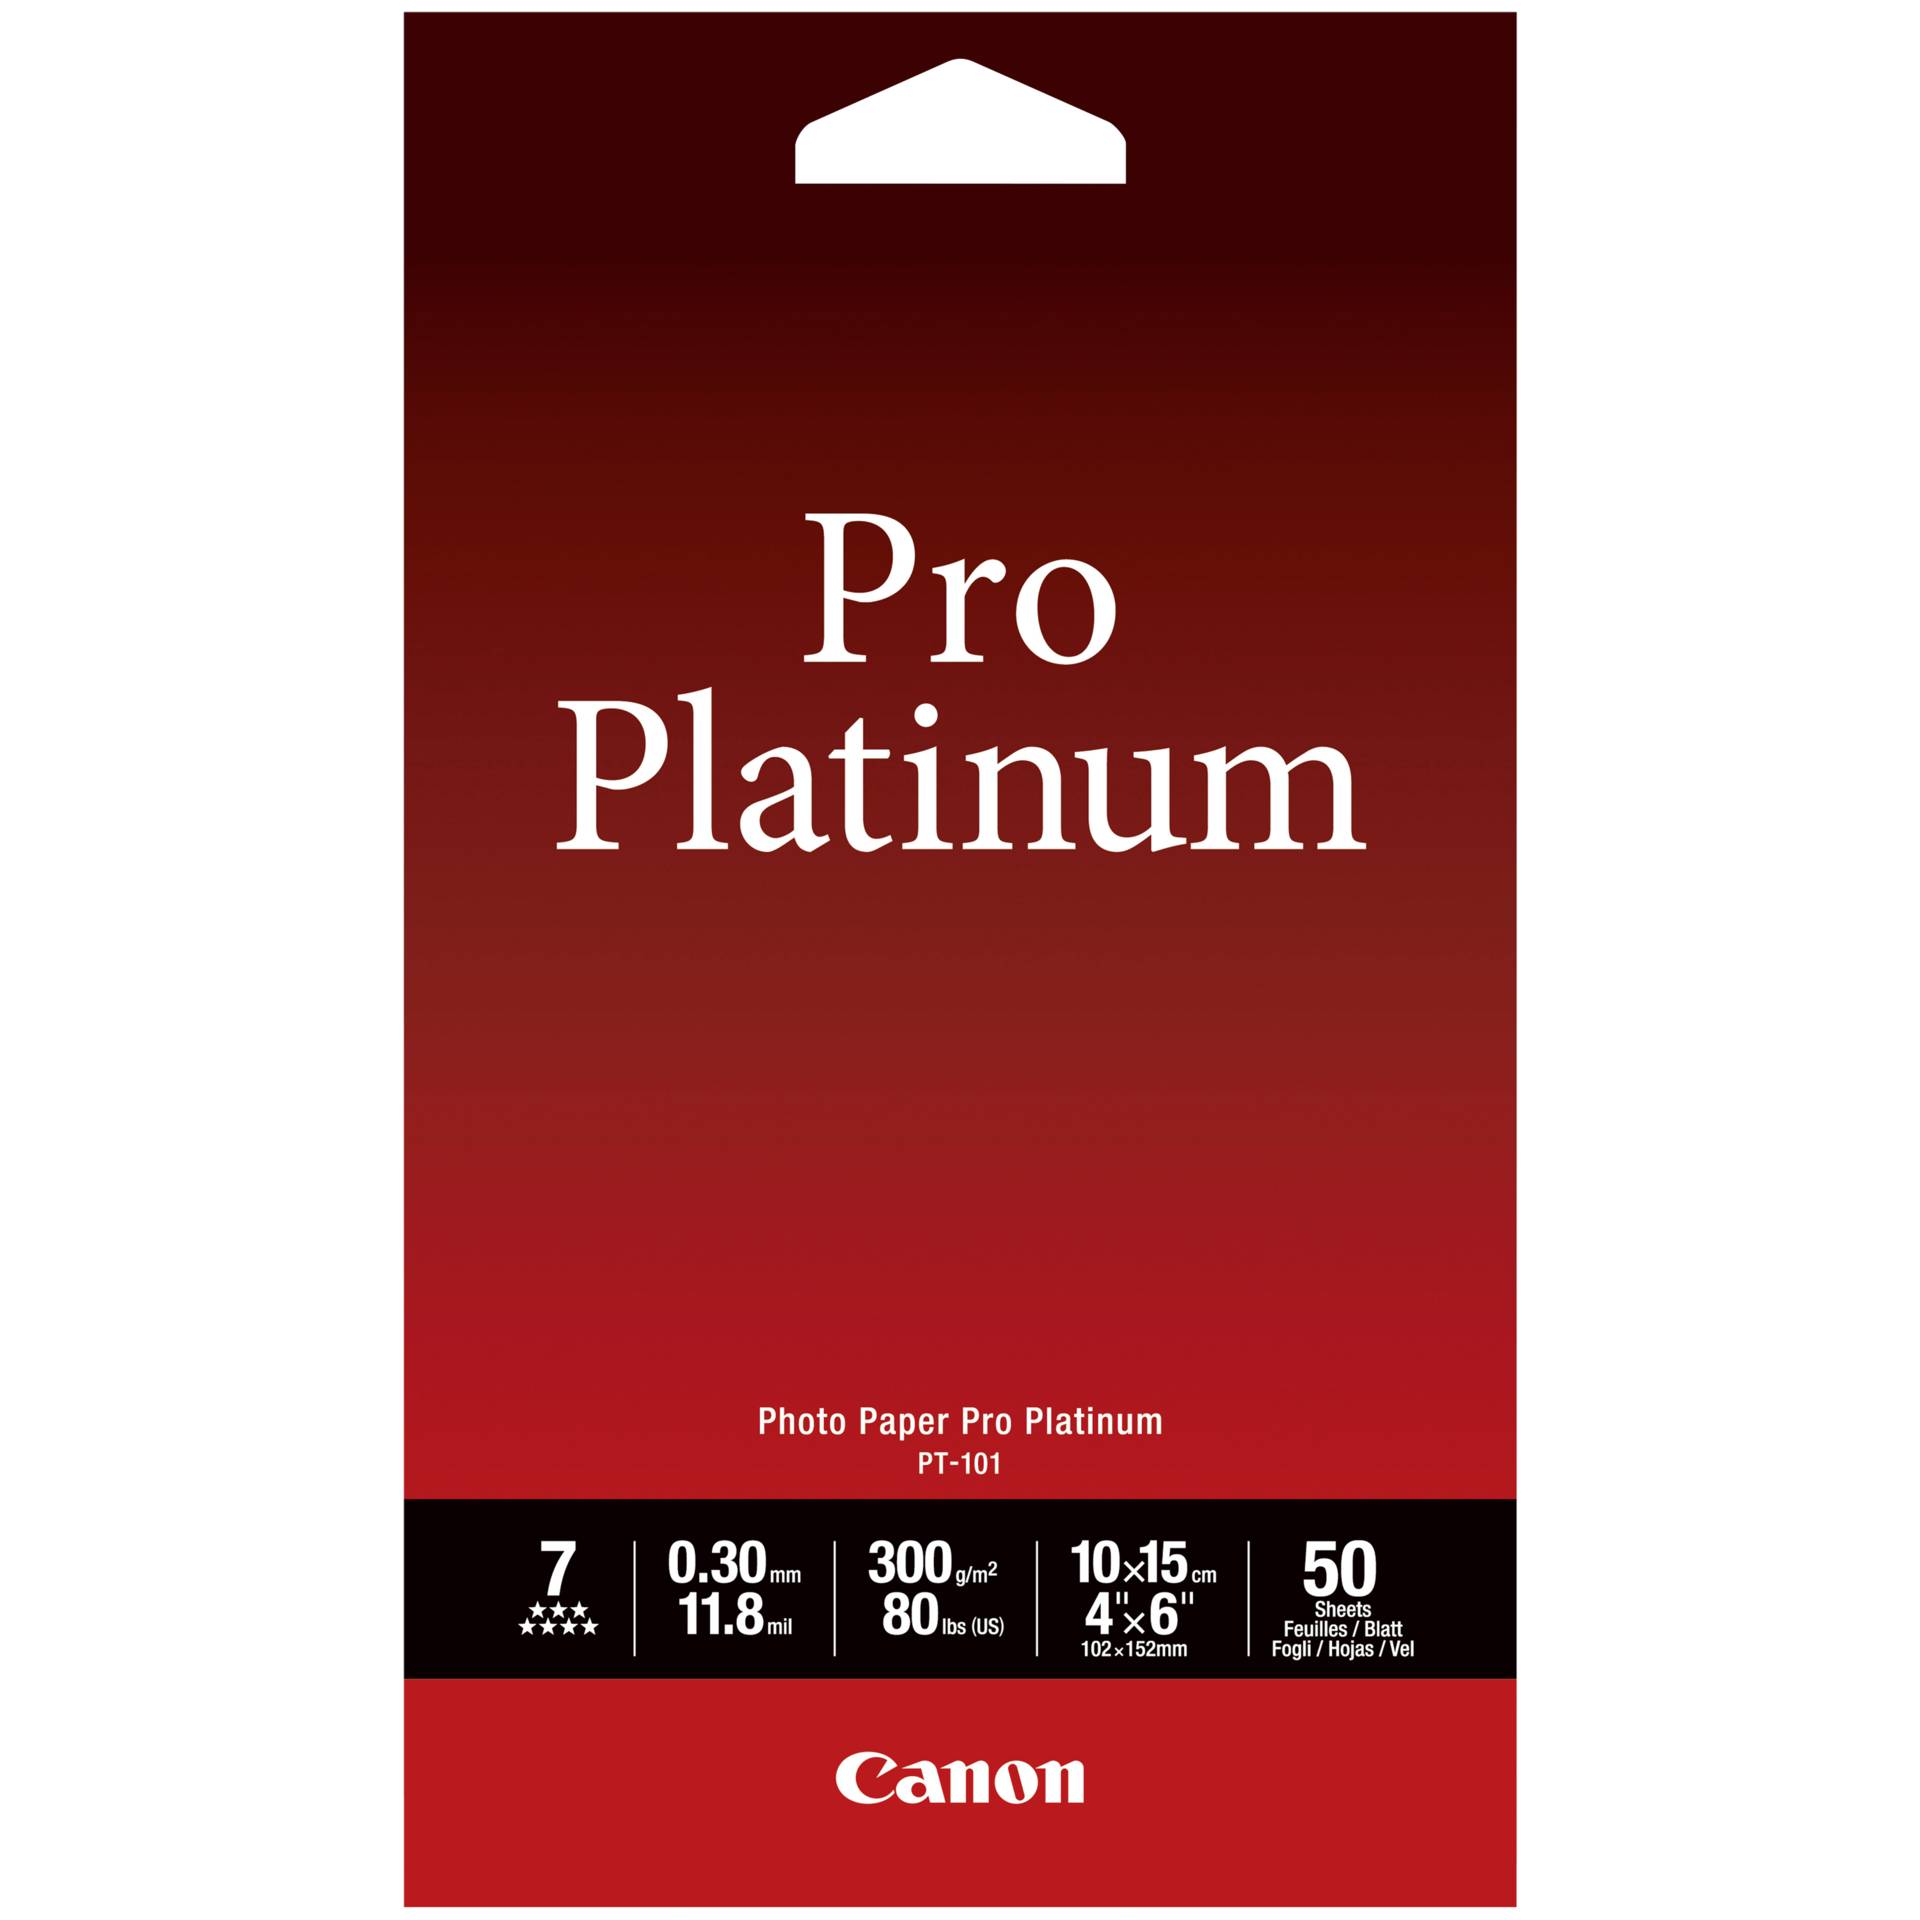 Canon PT-101 10x15 cm, 50 fogli Photo carta Pro Platinum 300